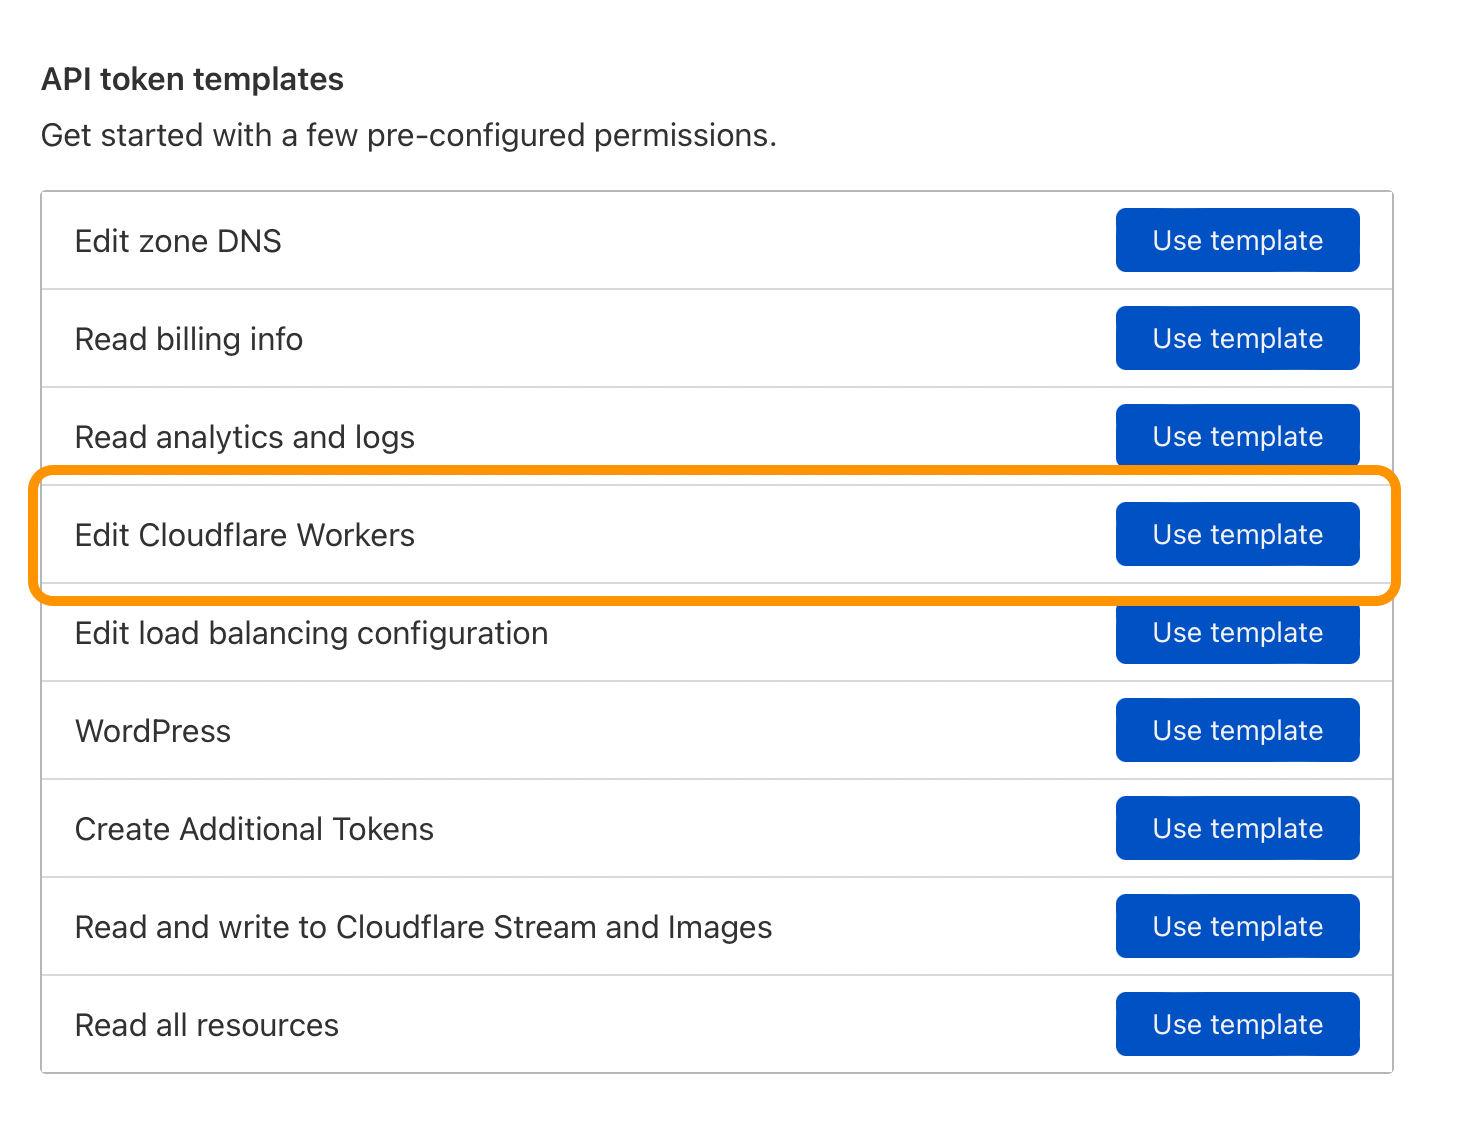 Screenshot: Select API Token template "Edit Cloudflare Workers"